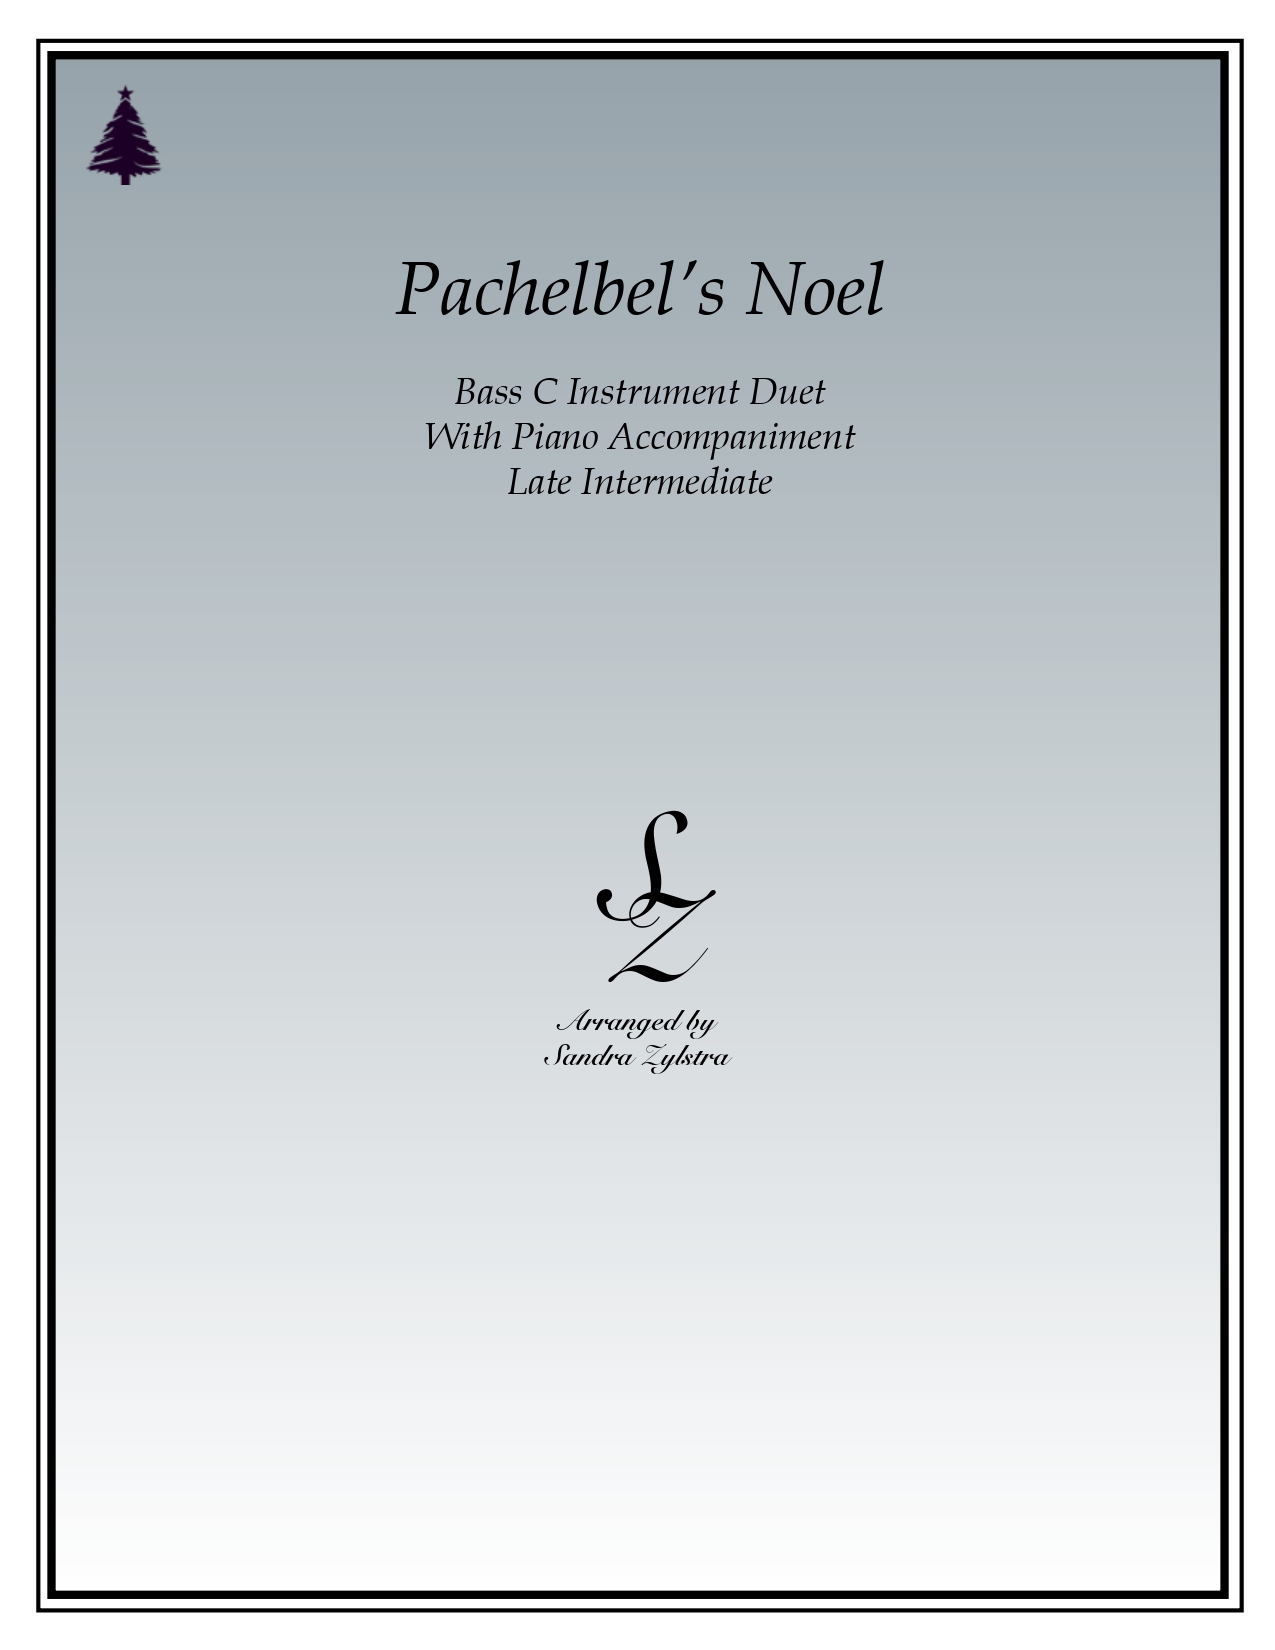 Pachelbels Noel bass C instrument duet parts cover page 00011